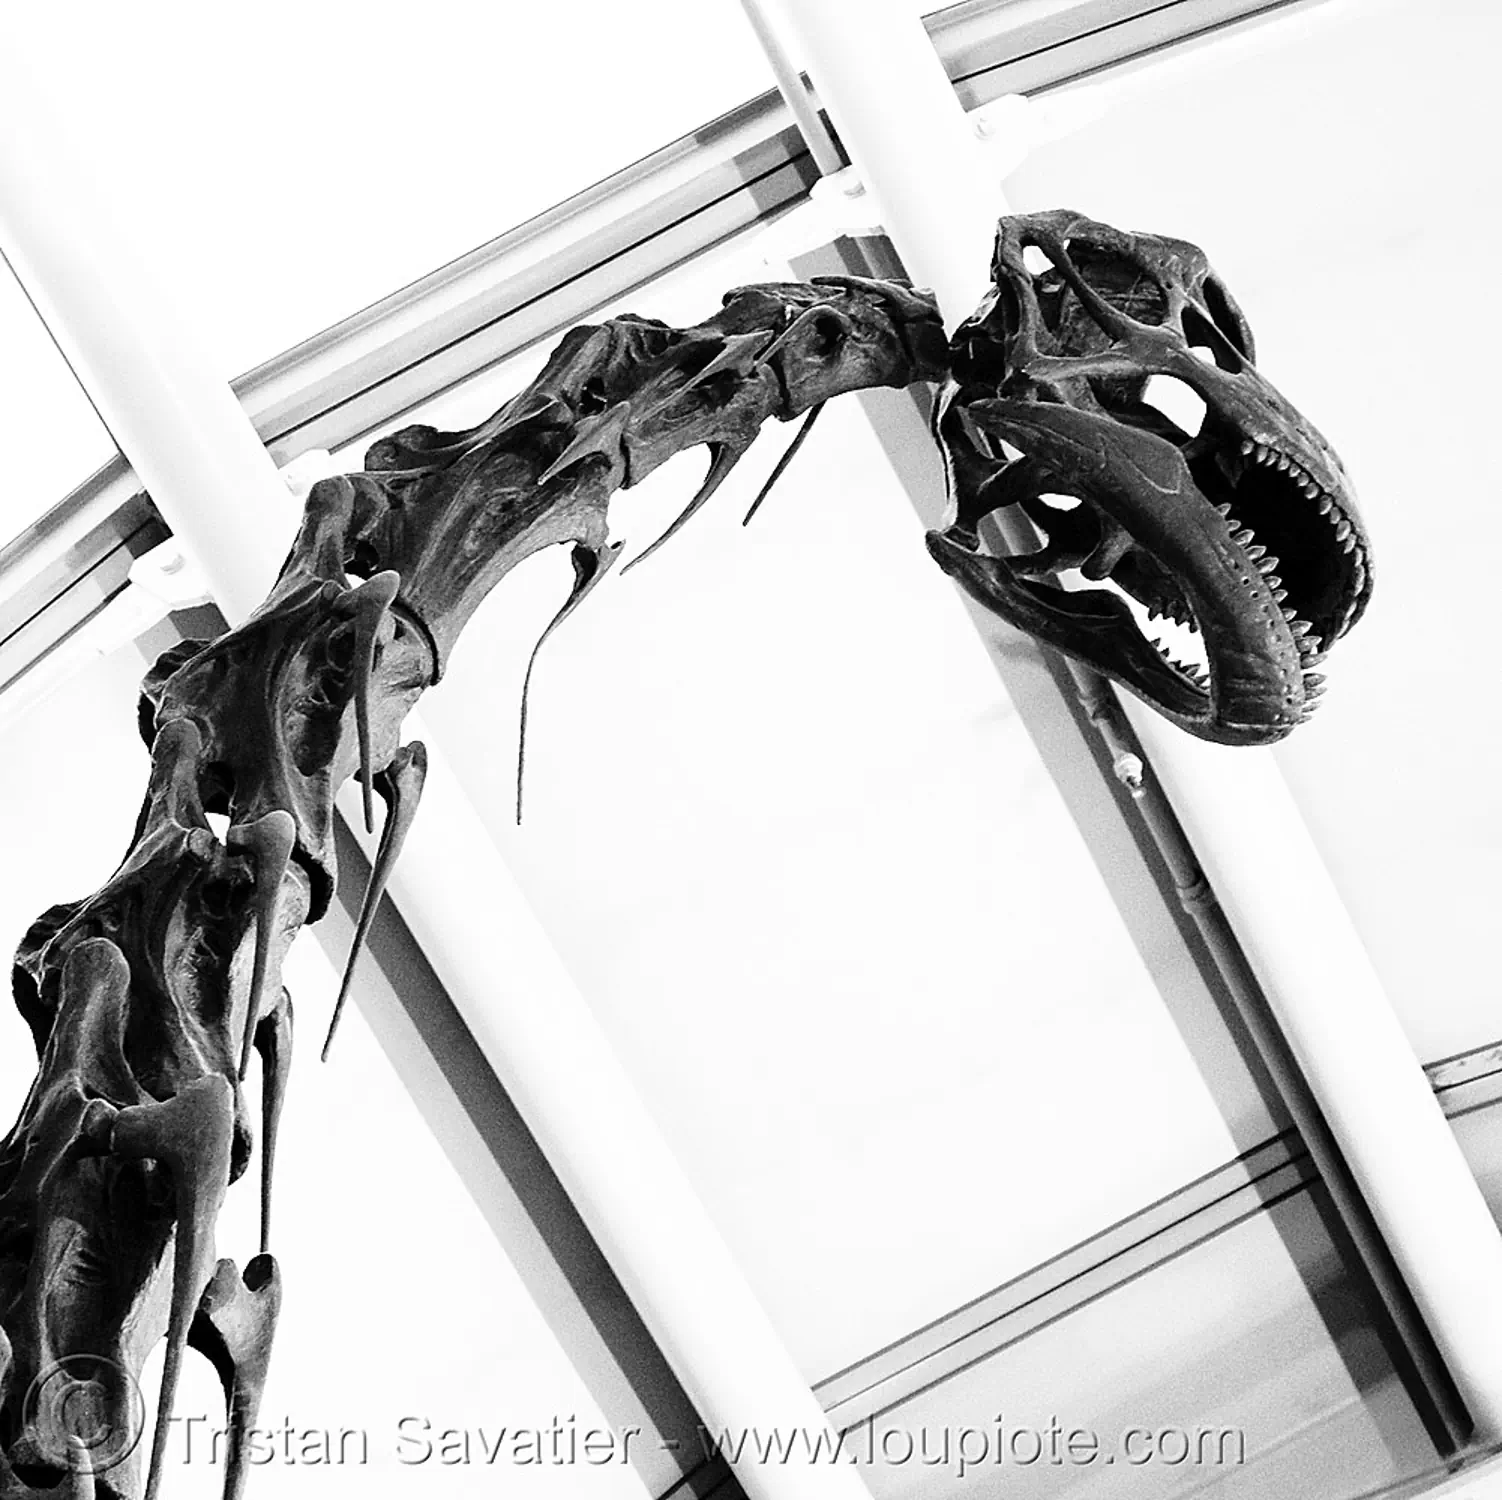 sauropod dinosaur skeleton - neck and head - chicago O'hare international airport, airport, altithorax, brachiosaurus, chicago, dinosaur, fossil, o'hare, ord, sauropod, skeleton